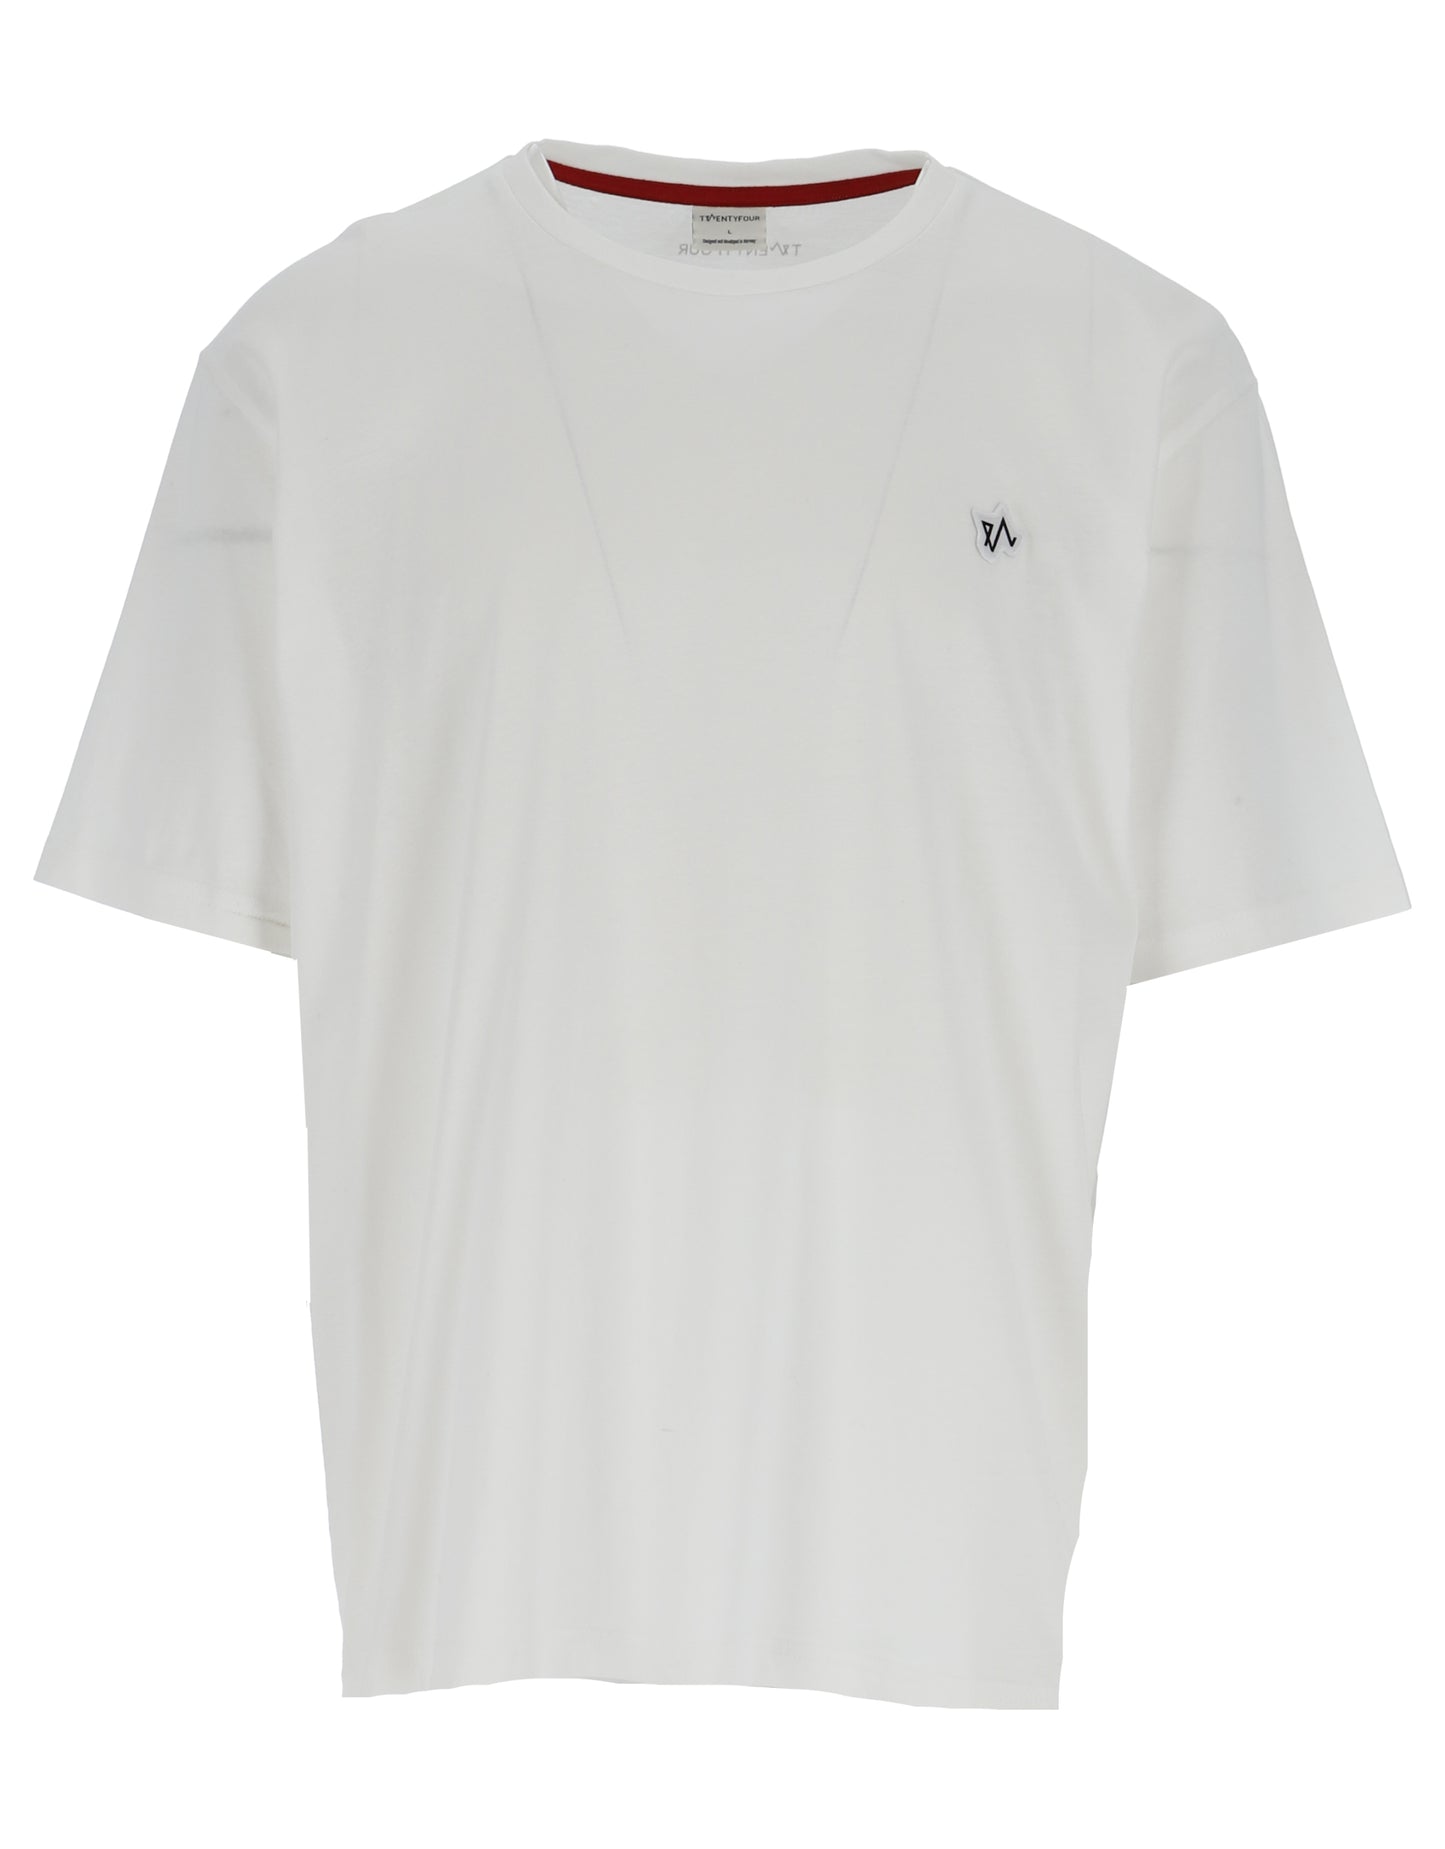 Fashion - T-shirt White 